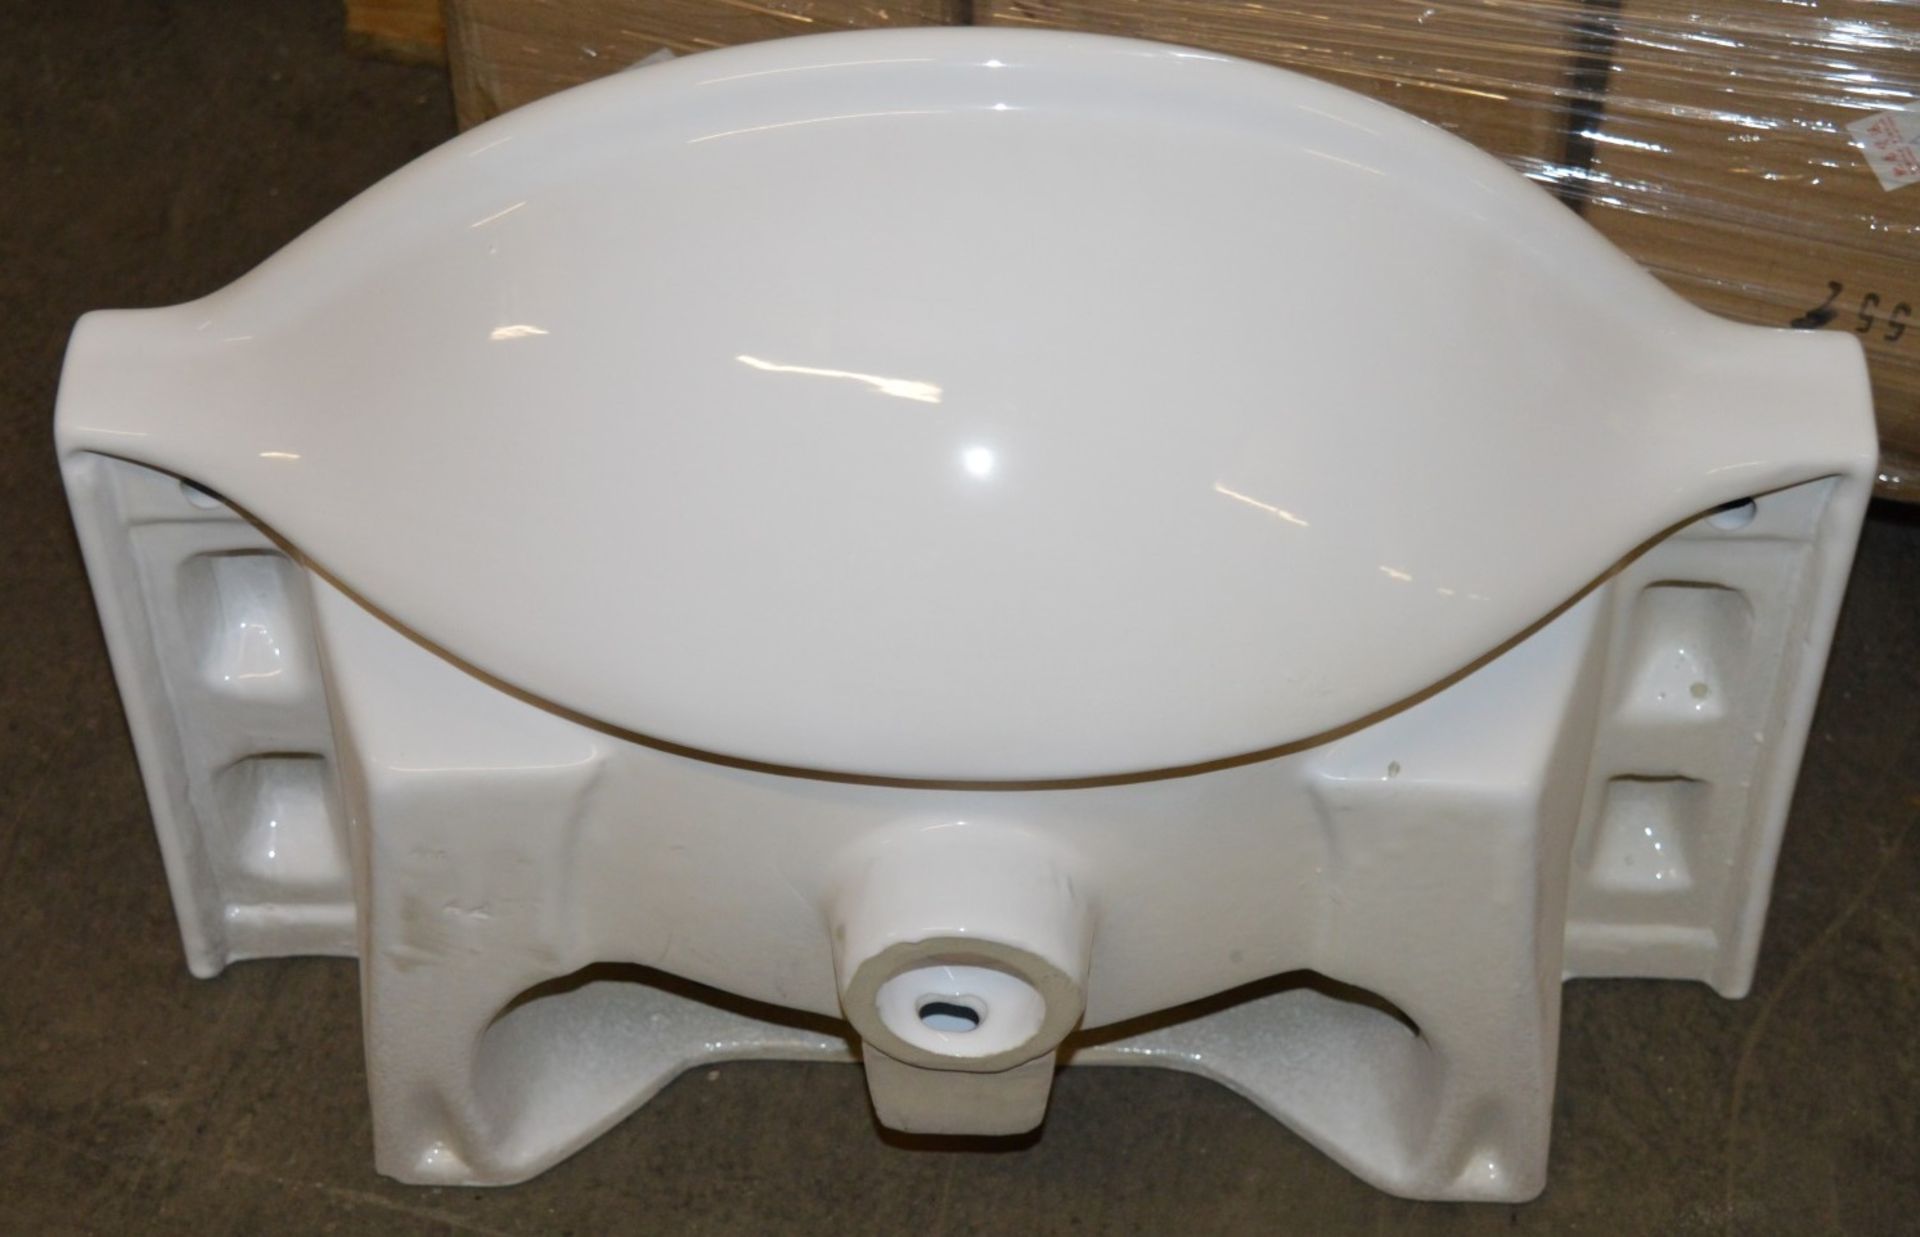 10 x Vogue Bathrooms LUNA Semi Recessed Bathroom Sink Basins - High Quality Ceramic Sink Basin - - Image 2 of 2